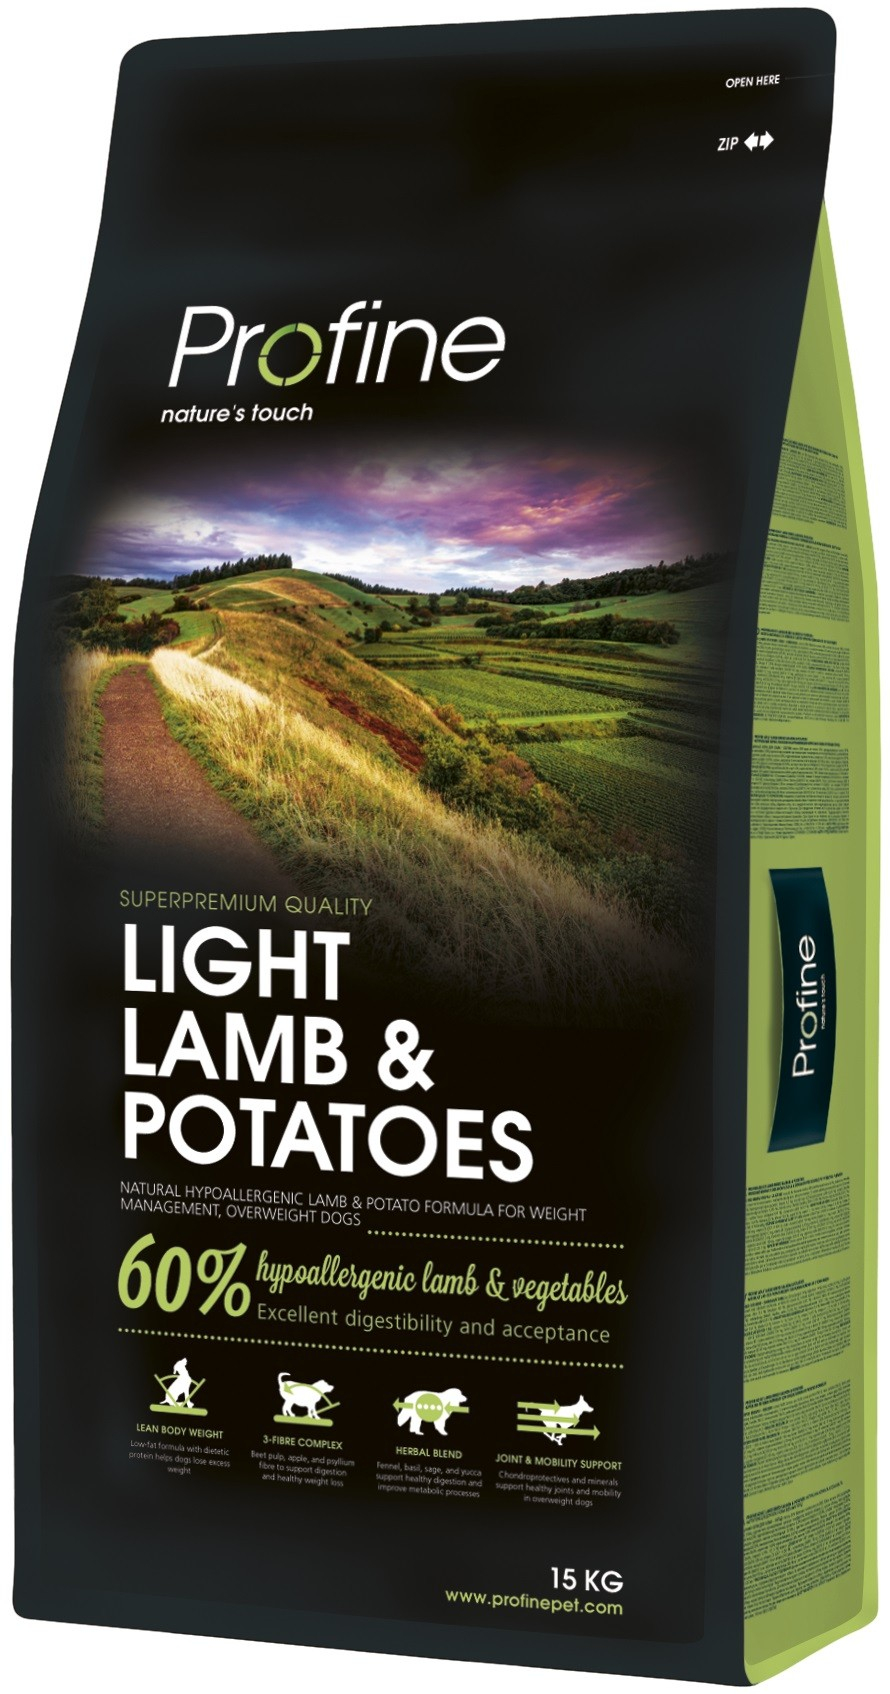 Profine Light Lamb and Potatoes